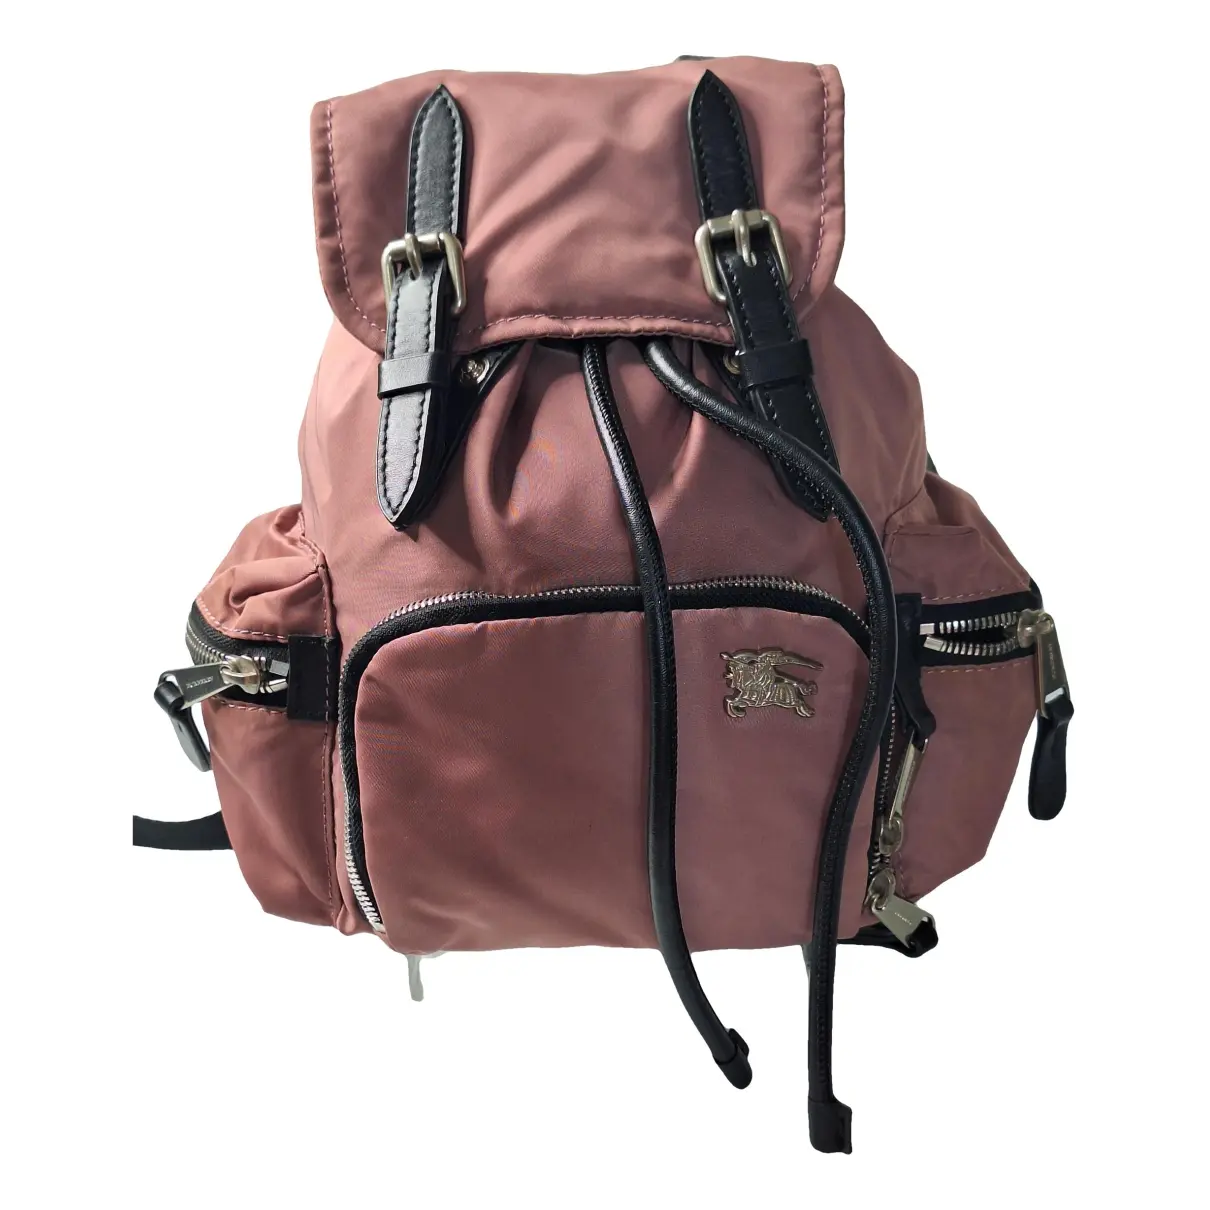 The Rucksack cloth backpack